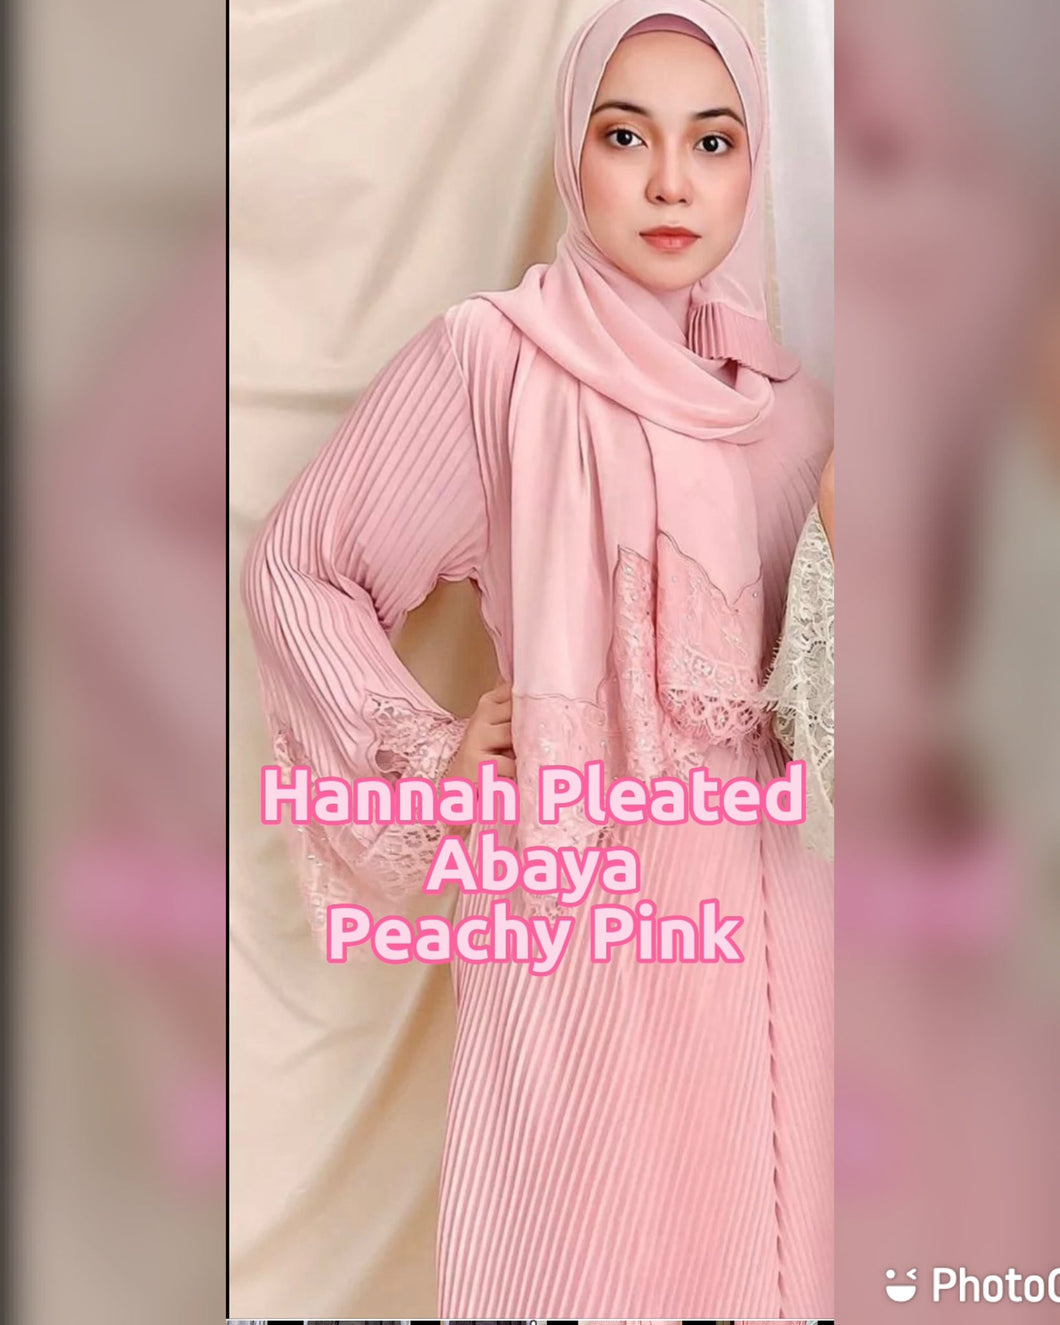 Hannah Pleated Abaya - Peachy Pink